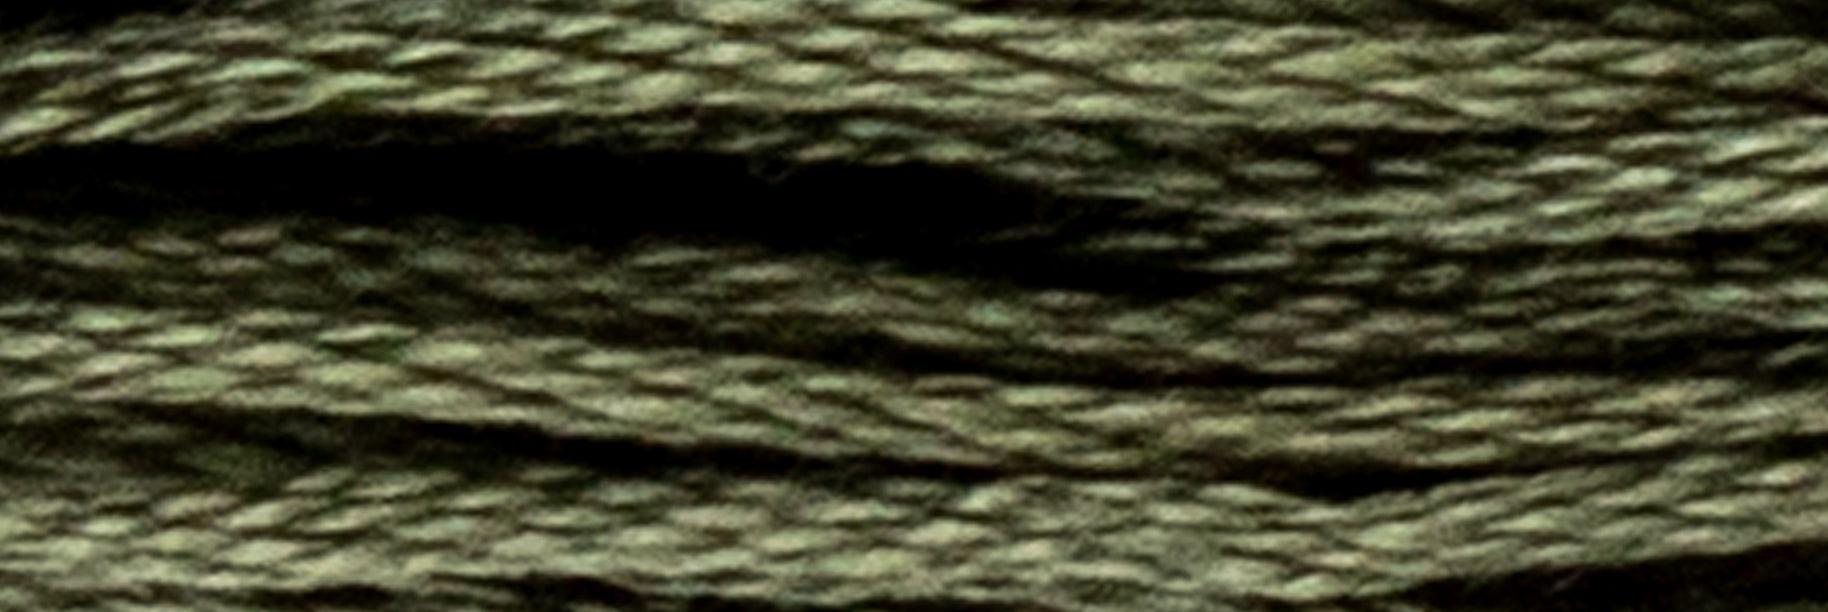 Stranded Cotton Luca-S - 492 / DMC 3787 / Anchor 1041 Stranded Cotton - HobbyJobby